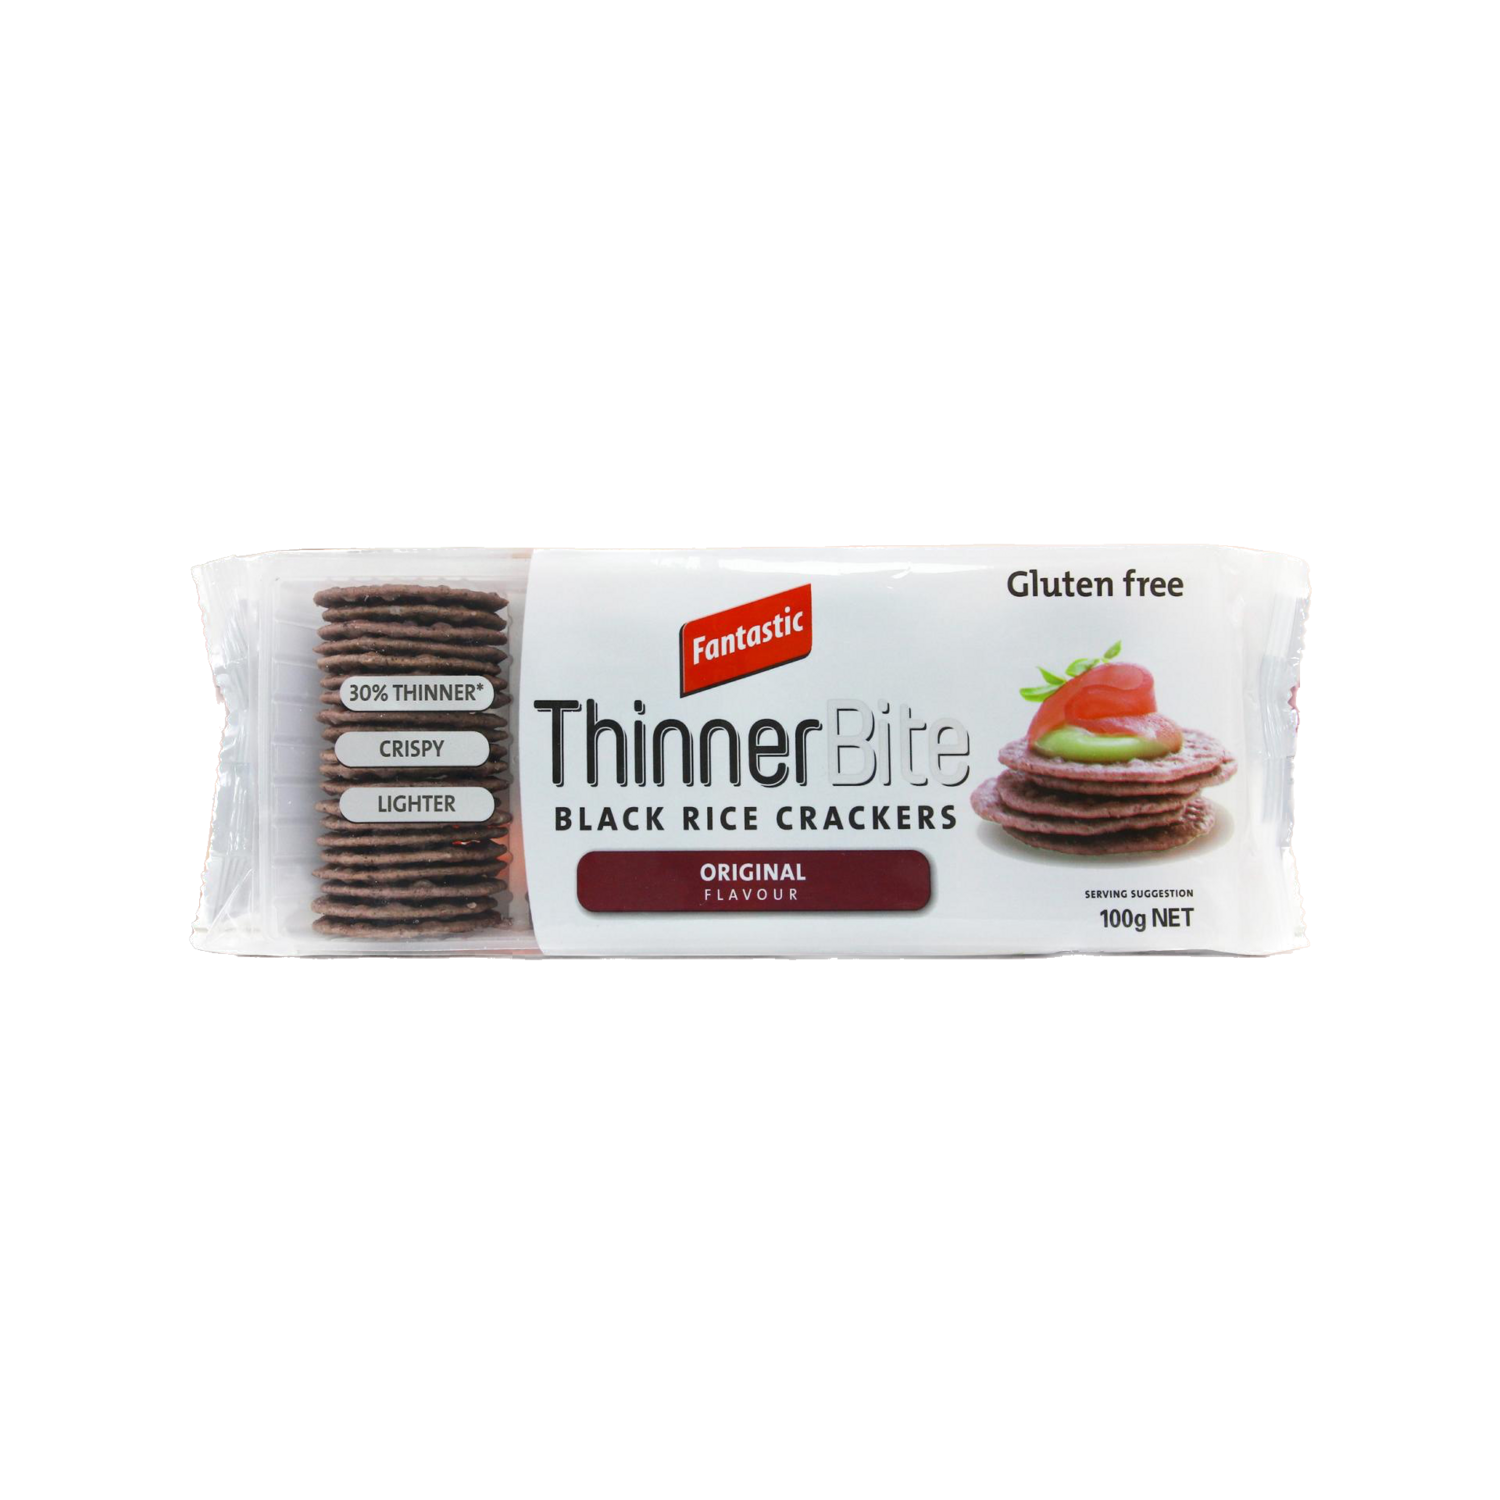 Fantastic Thinner Bite Original - Black Rice Crackers, Crispy, Lighter, Gluten Free, 100 g | Imported 